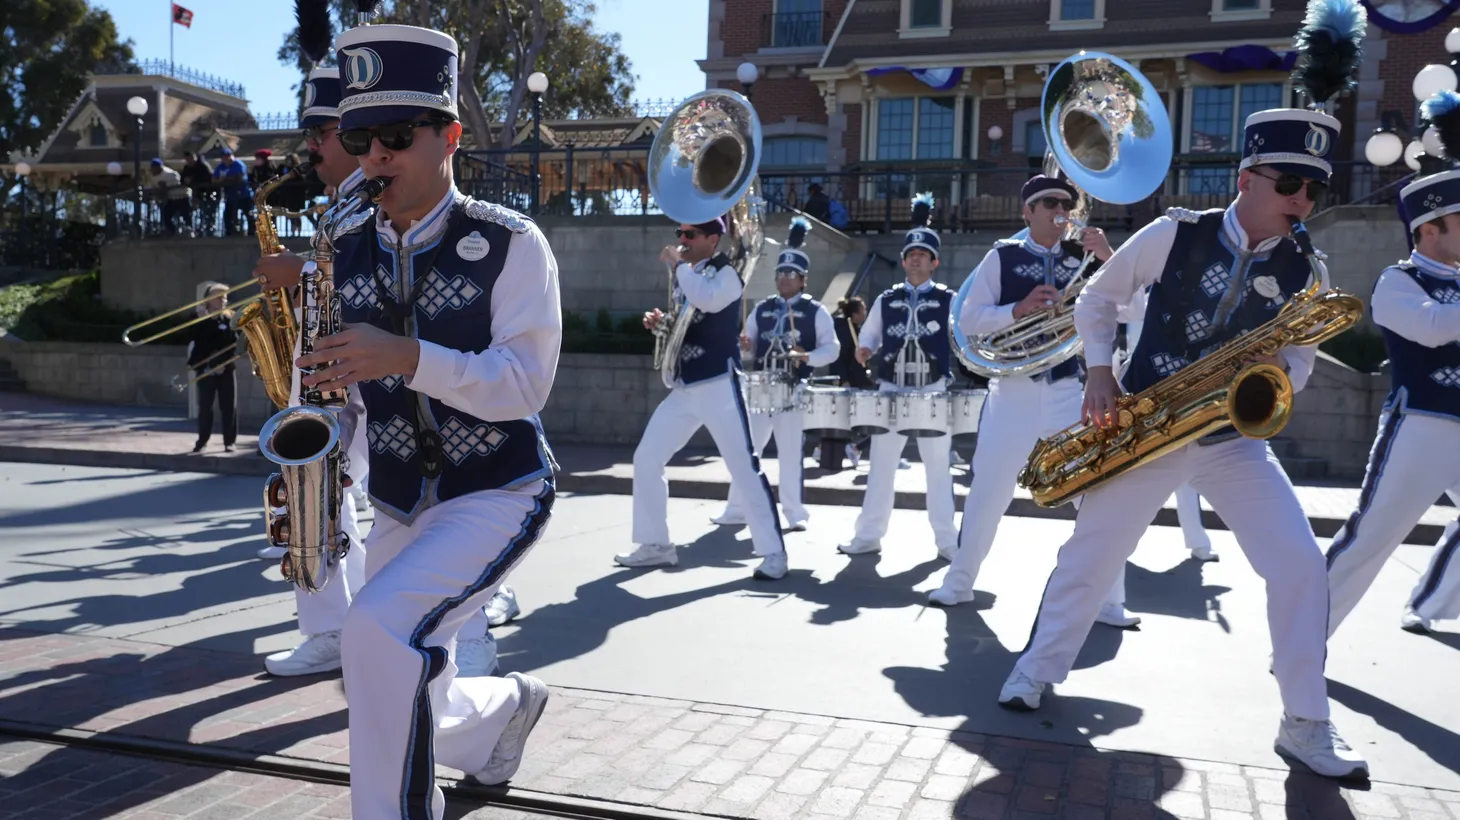 Musicians perform at Disneyland, Anaheim, California, Jan 26, 2023.